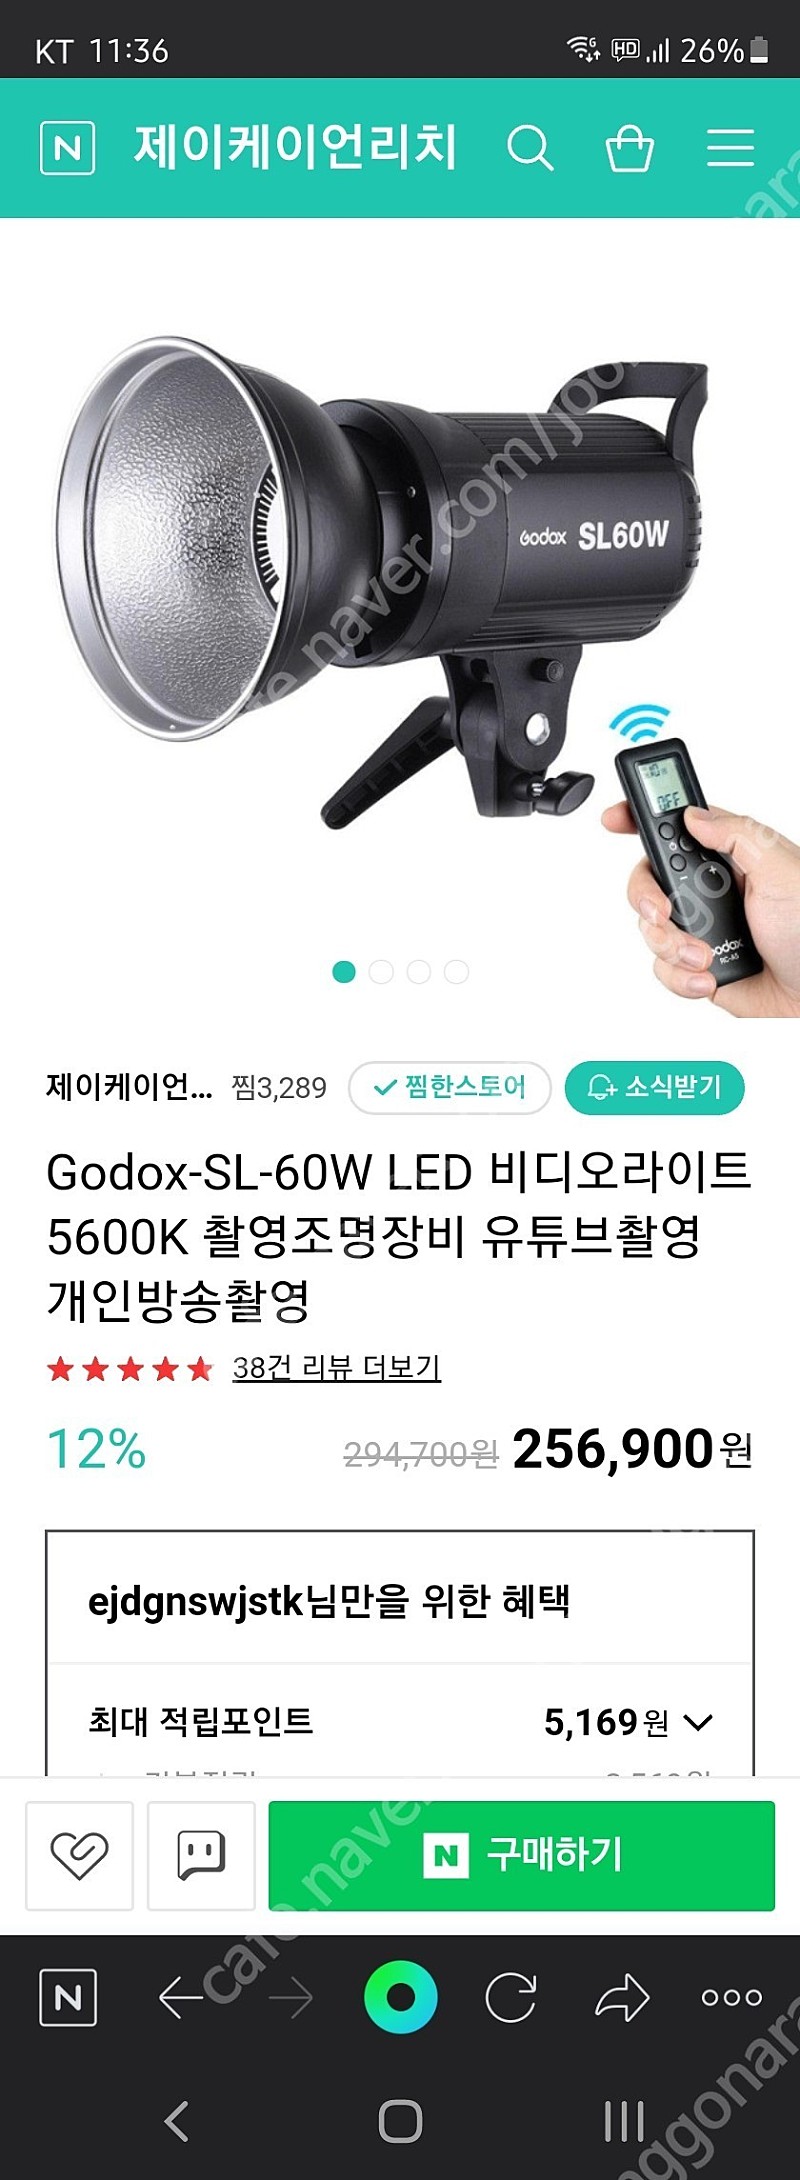 Godox-SL-60W LED 비디오라이트 5600K 촬영조명장비 유튜브촬영 개인방송촬영